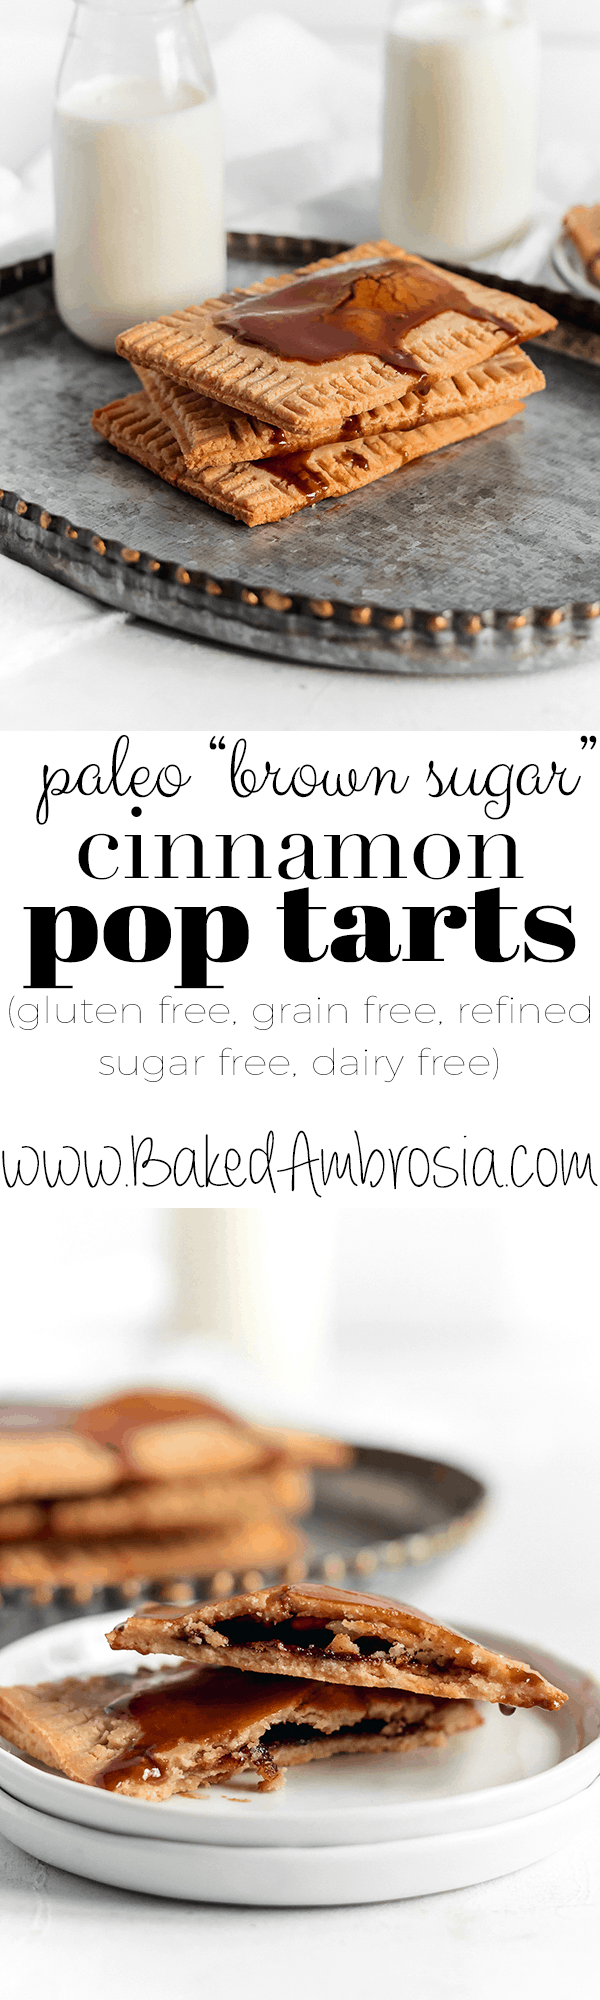 Paleo Brown Sugar Cinnamon Pop Tarts (gluten free, grain free, refined sugar free)